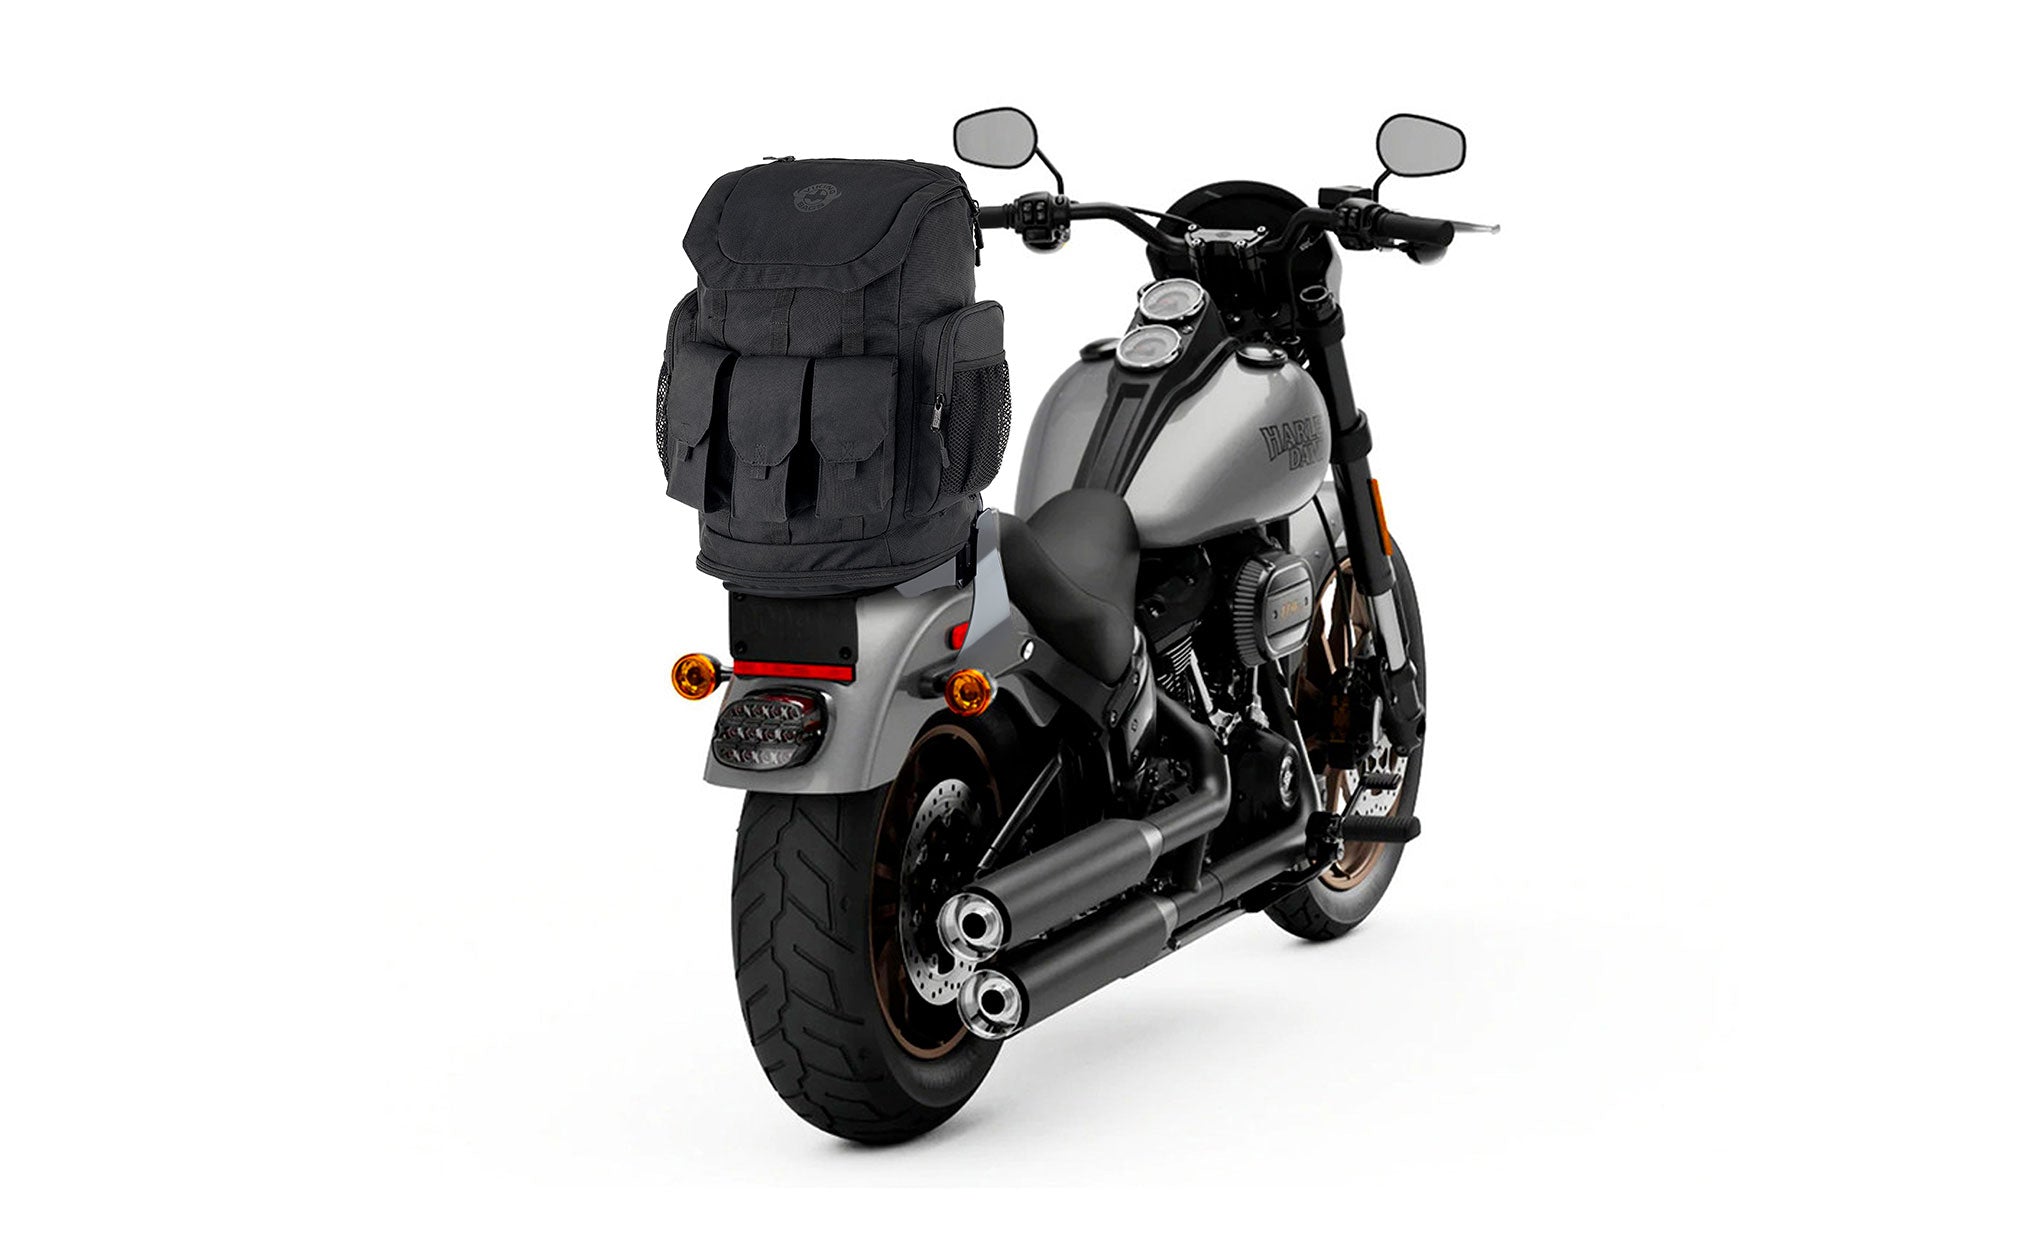 Viking Trident XL Honda Motorcycle Sissy Bar Backpack Bag on Bike View @expand